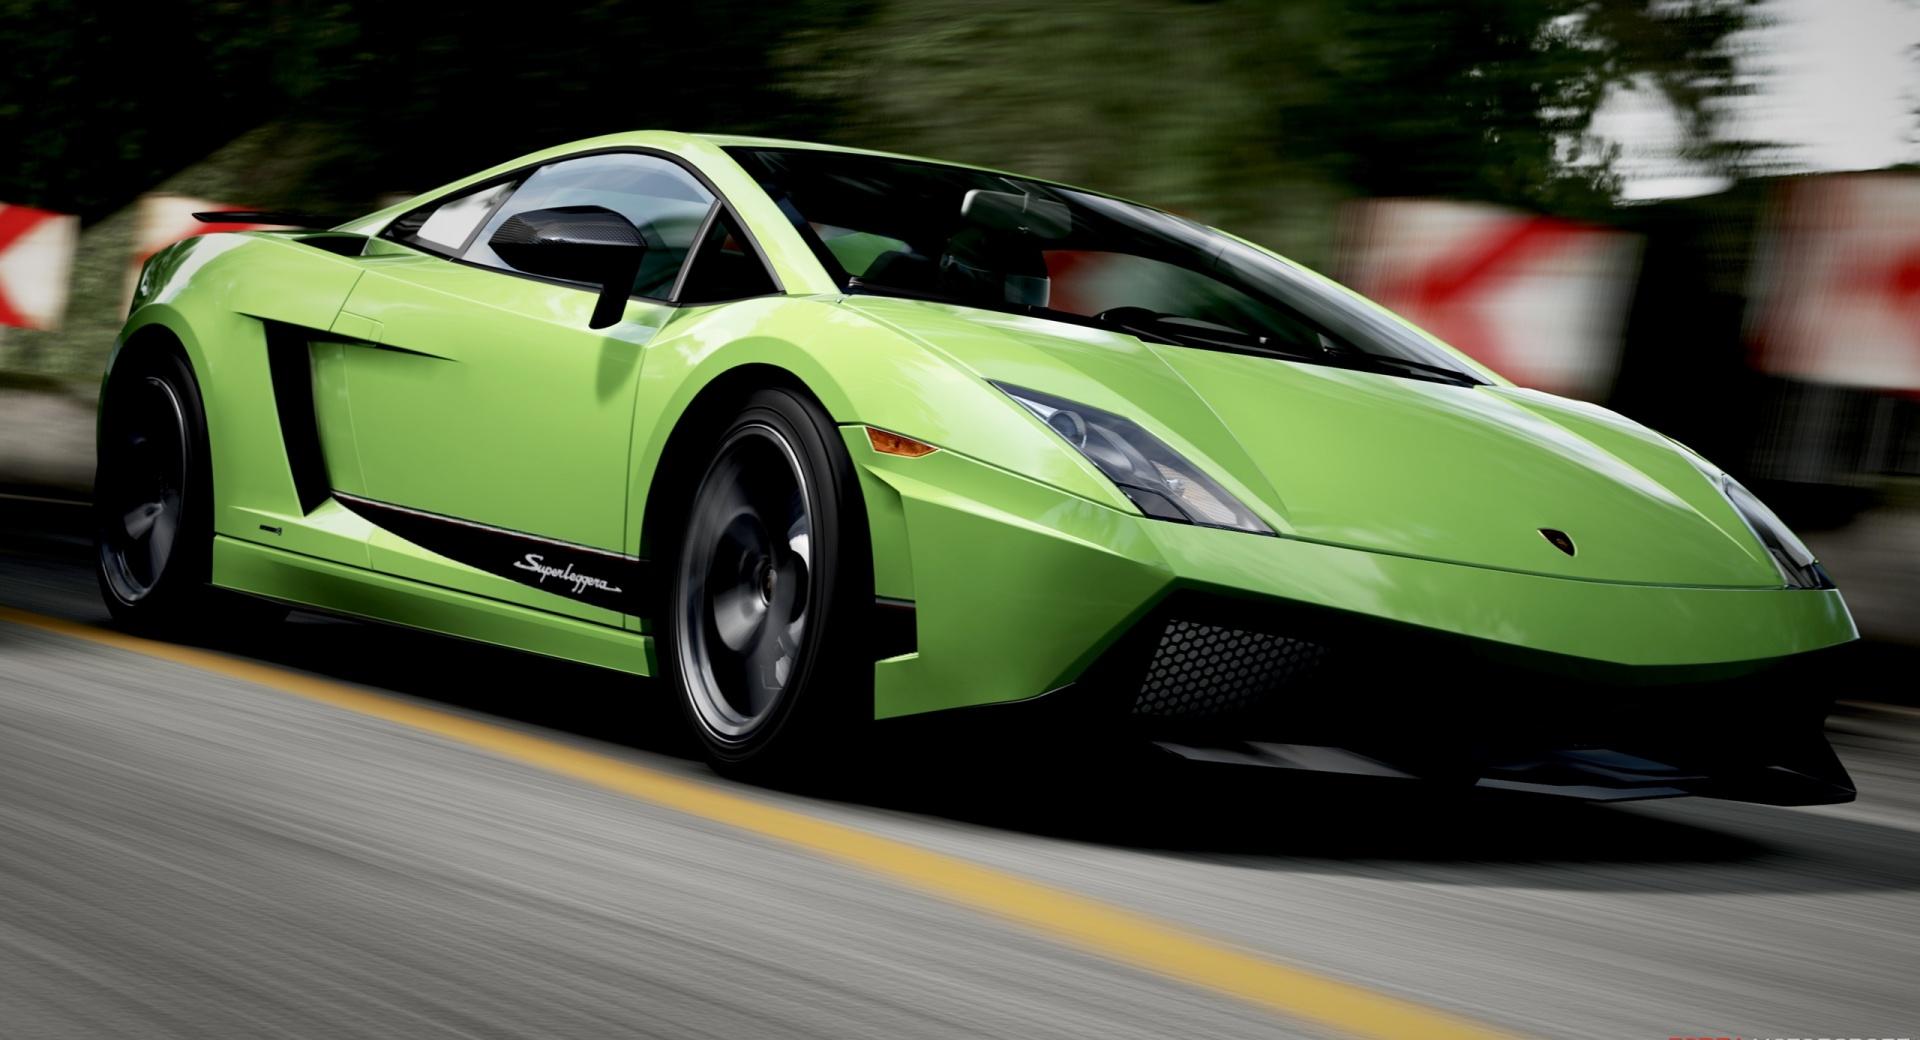 Lamborghini Gallardo in Forza Motorsport 4 at 2048 x 2048 iPad size wallpapers HD quality